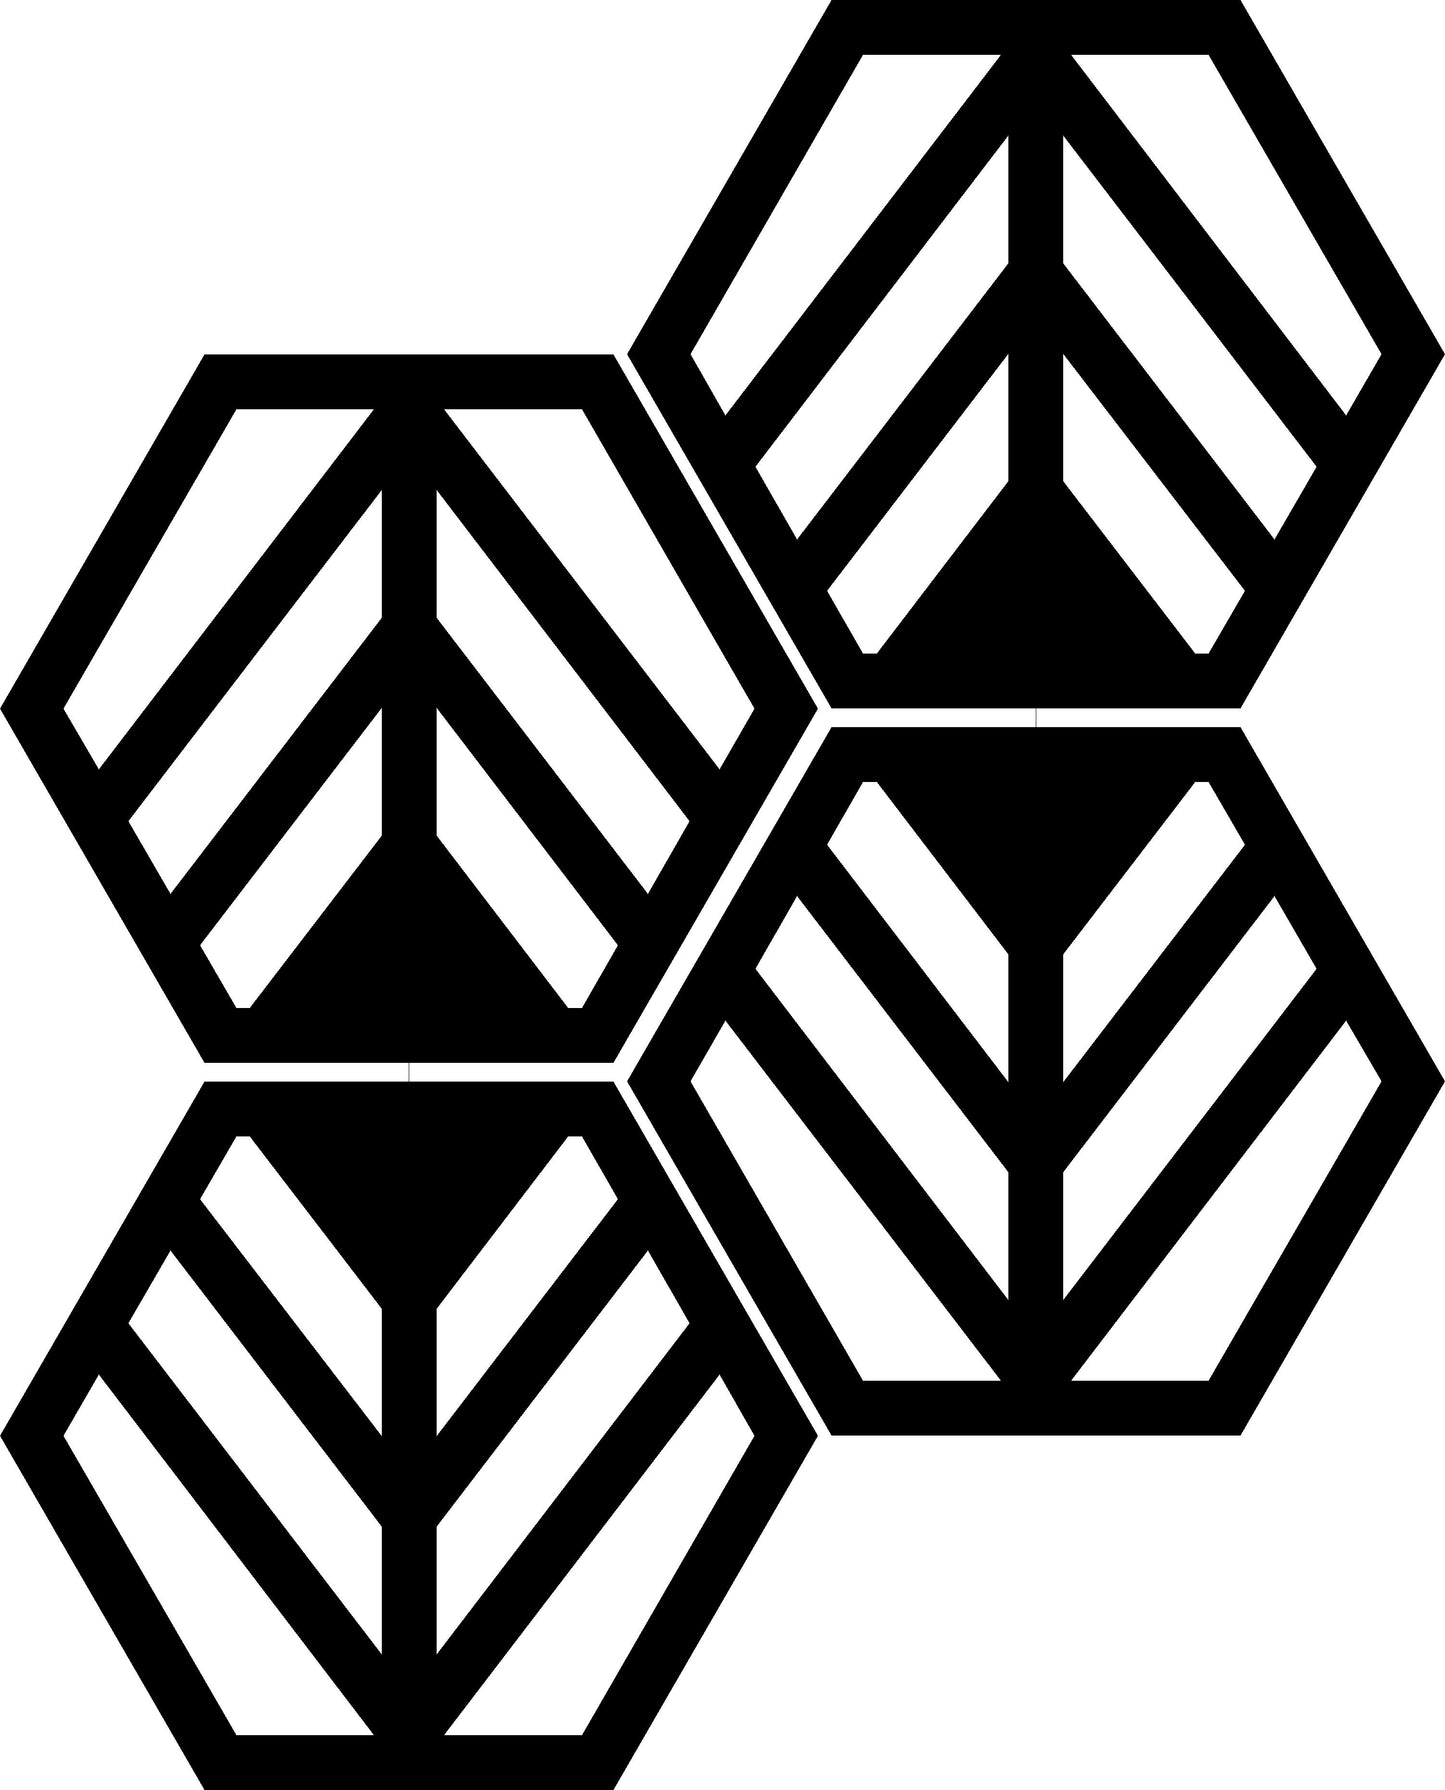 Hexagonal Design 4 (Large)